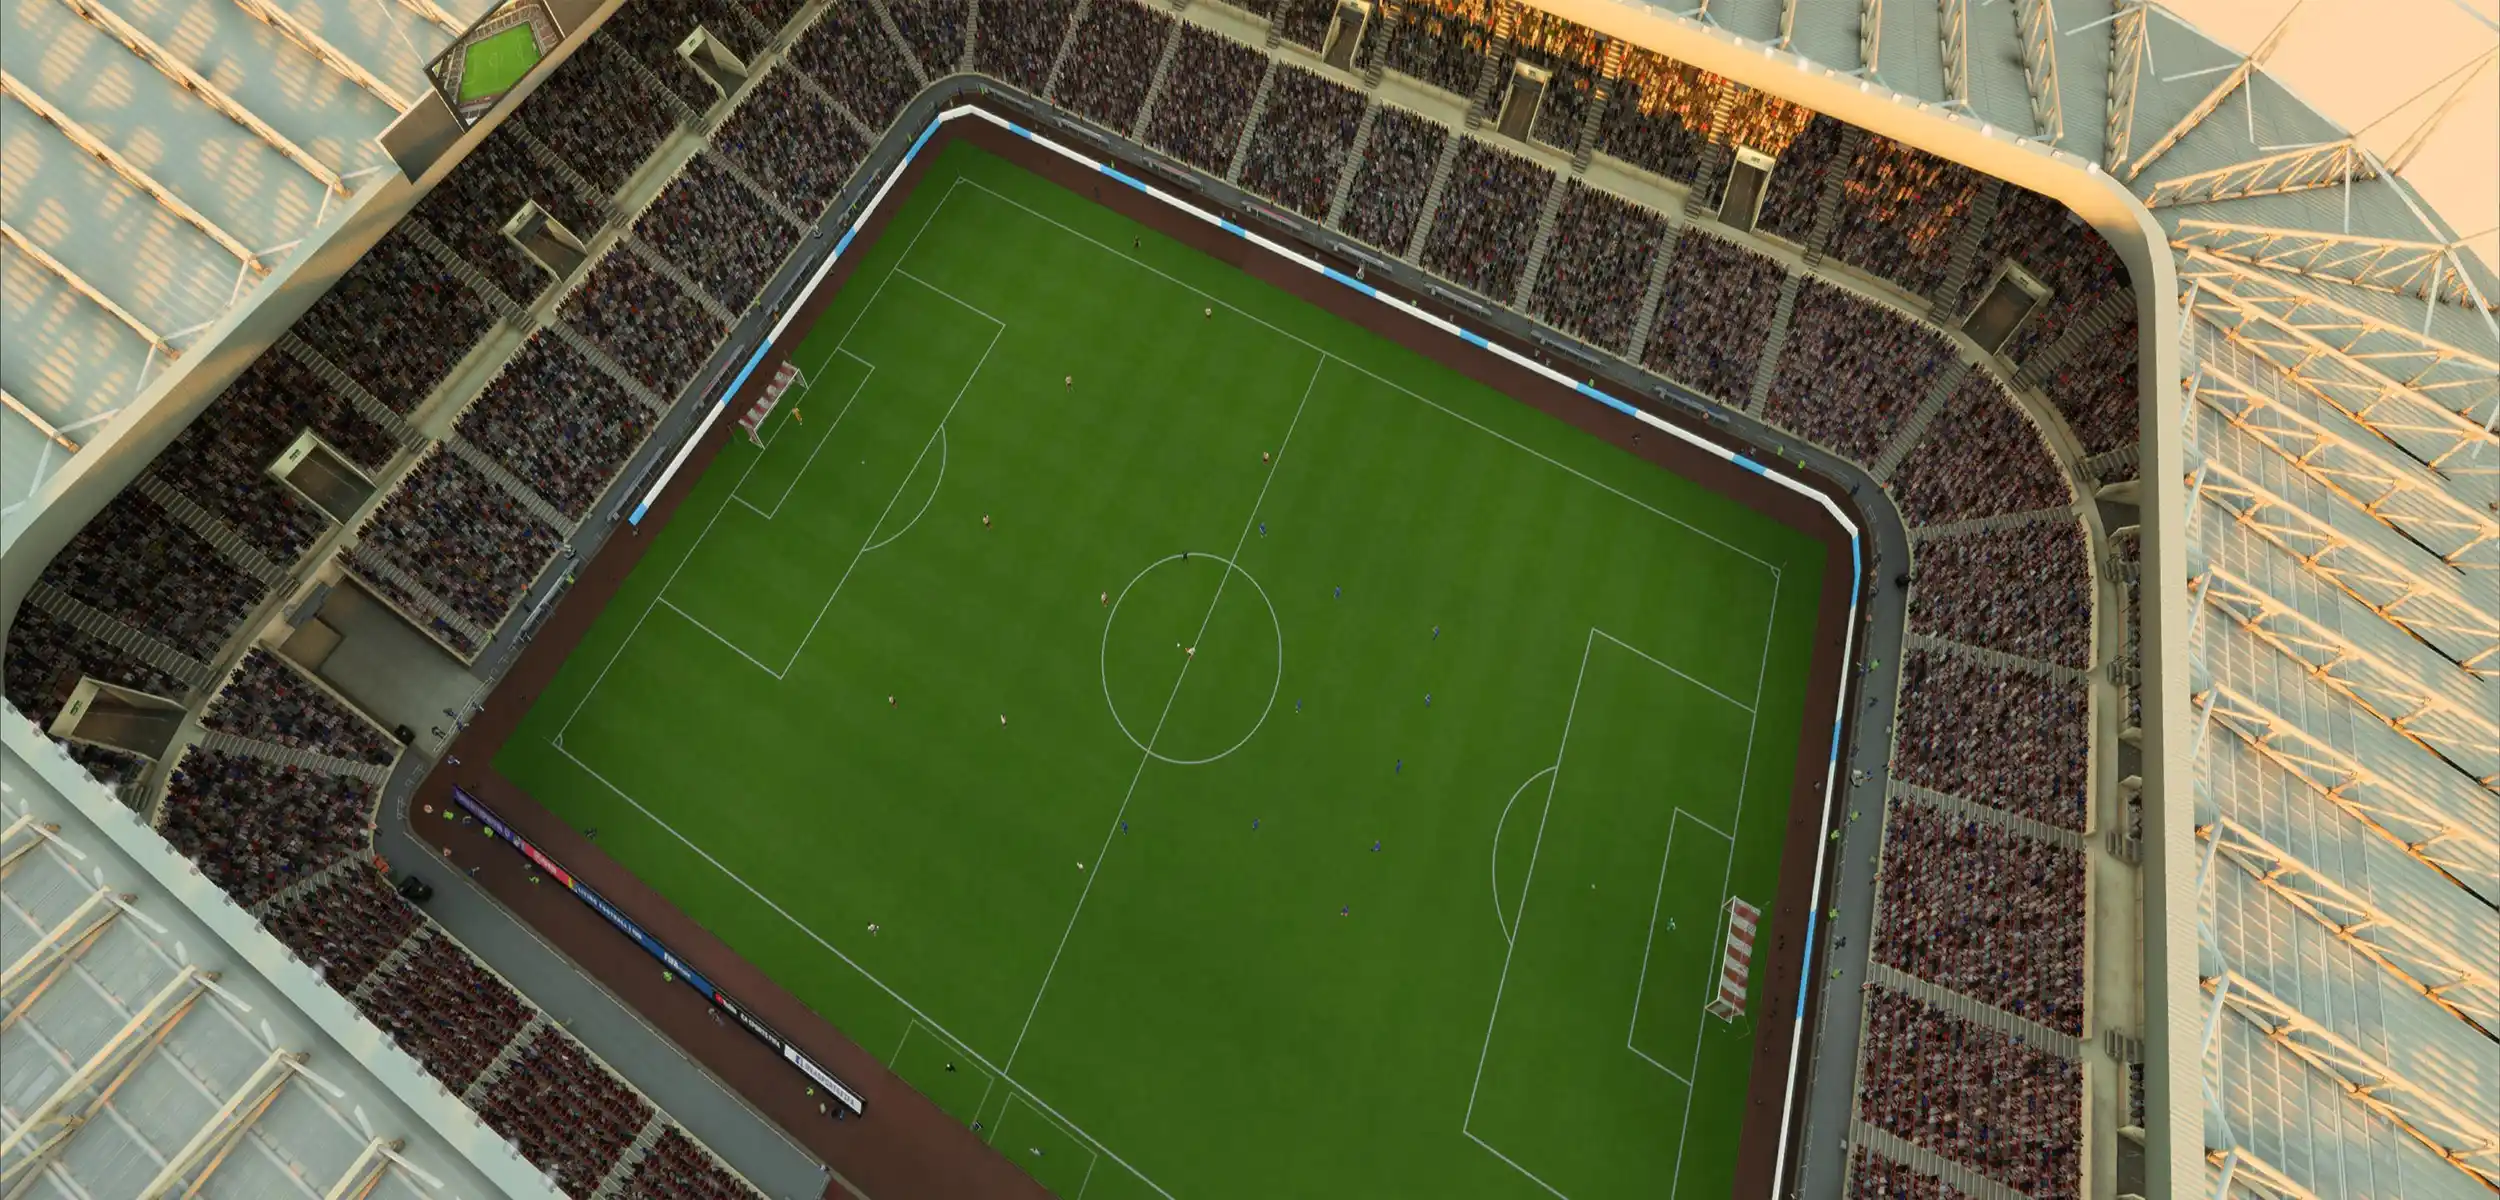 Stadium Of Light - FIFA